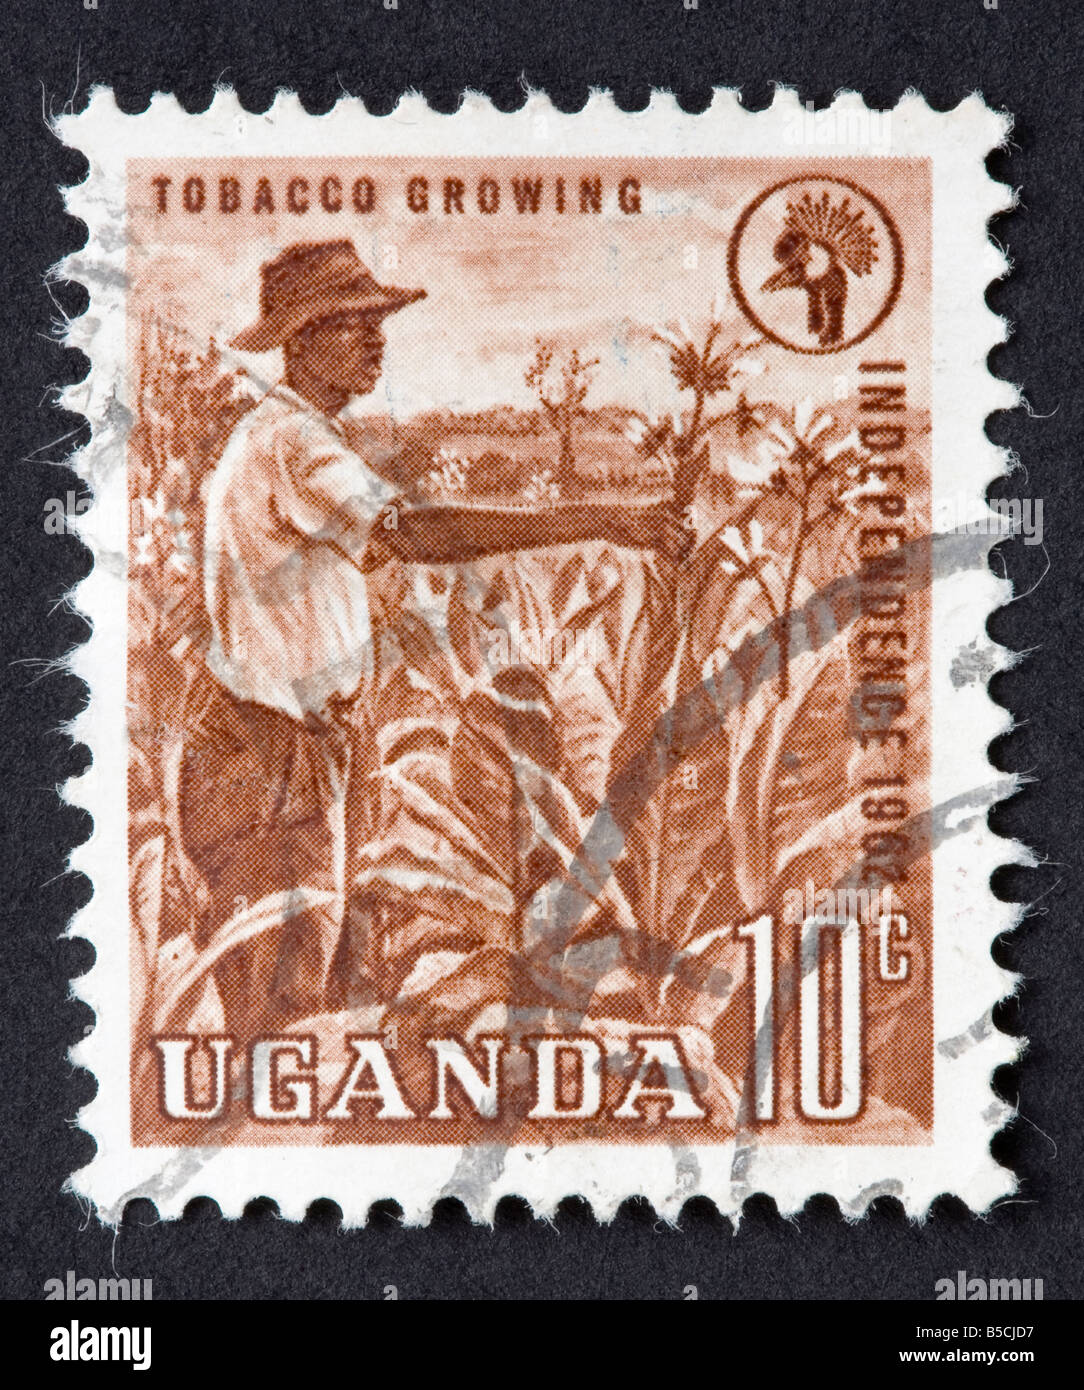 Ugandan postage stamp Stock Photo